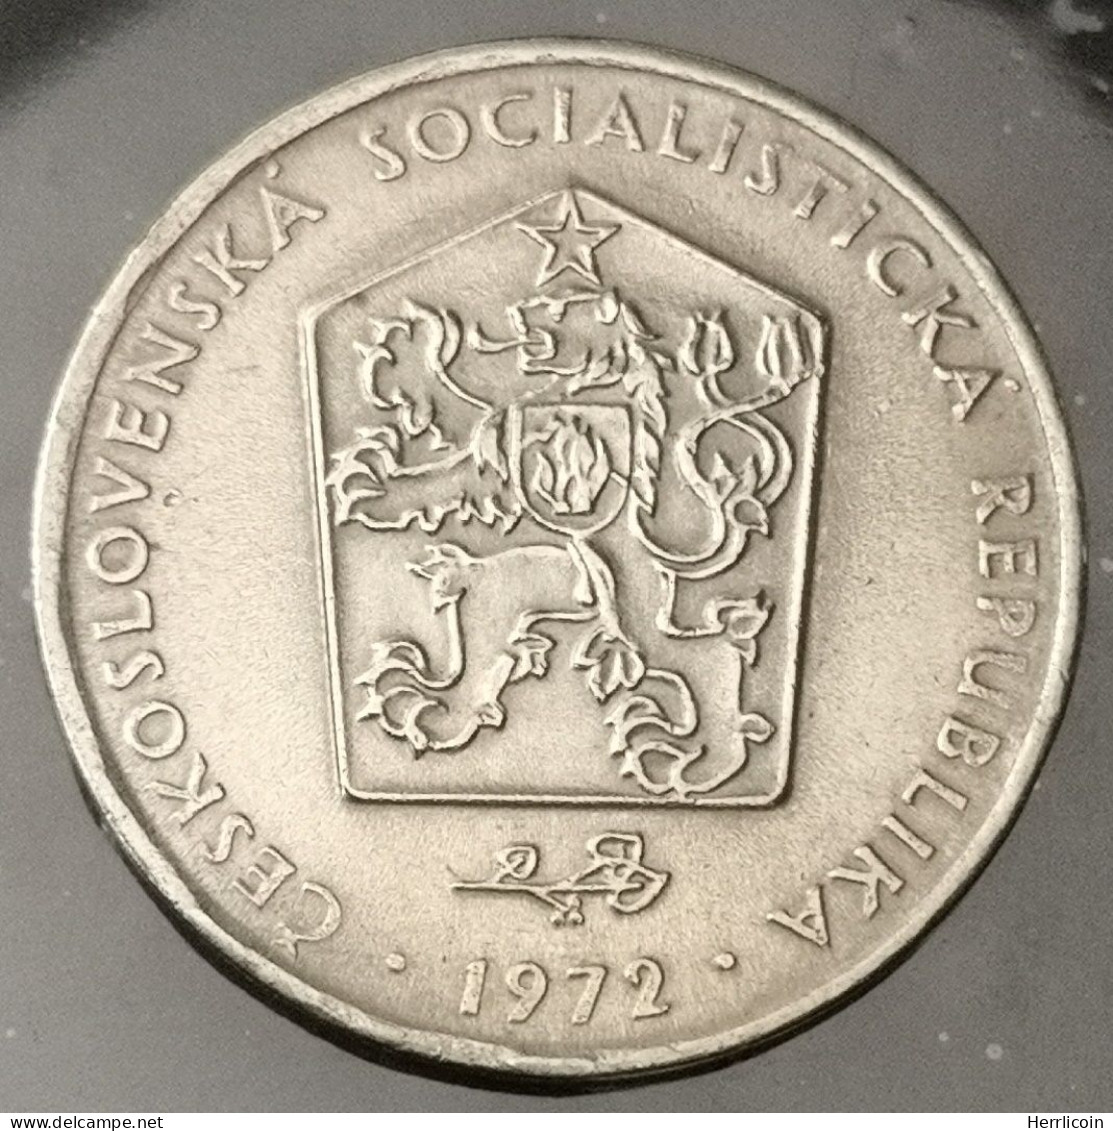 Monnaie Slovaquie - 1972 - 2 Koruny - Slowakei